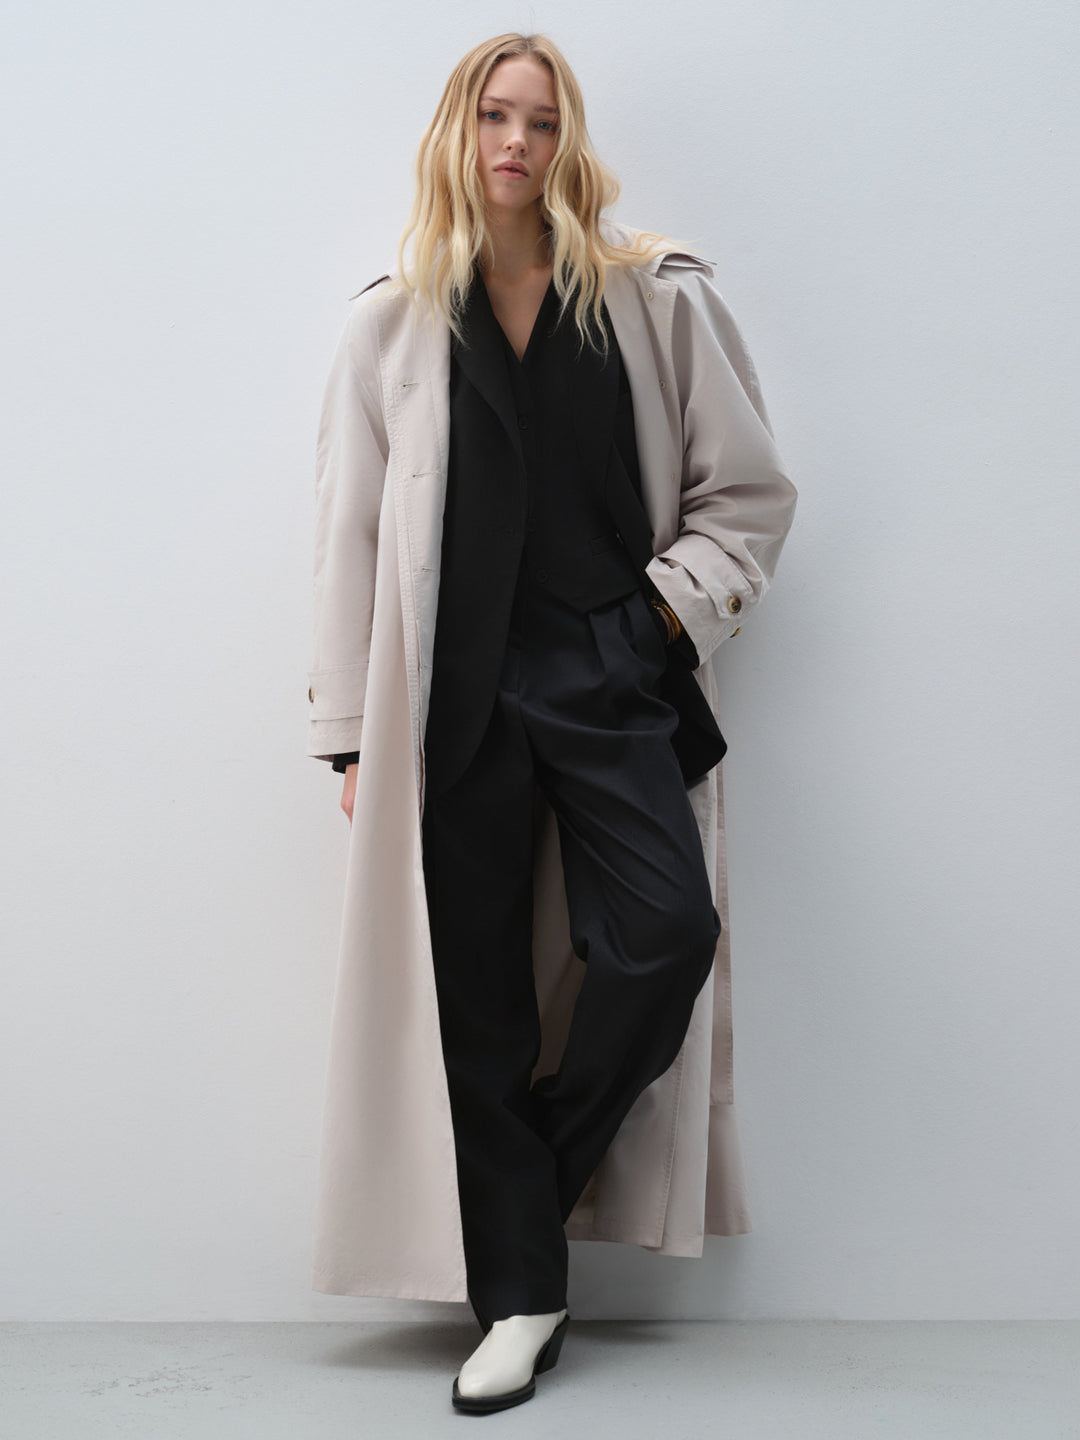 raincoat - women - outerwear - trench coat - beige - water-resistant